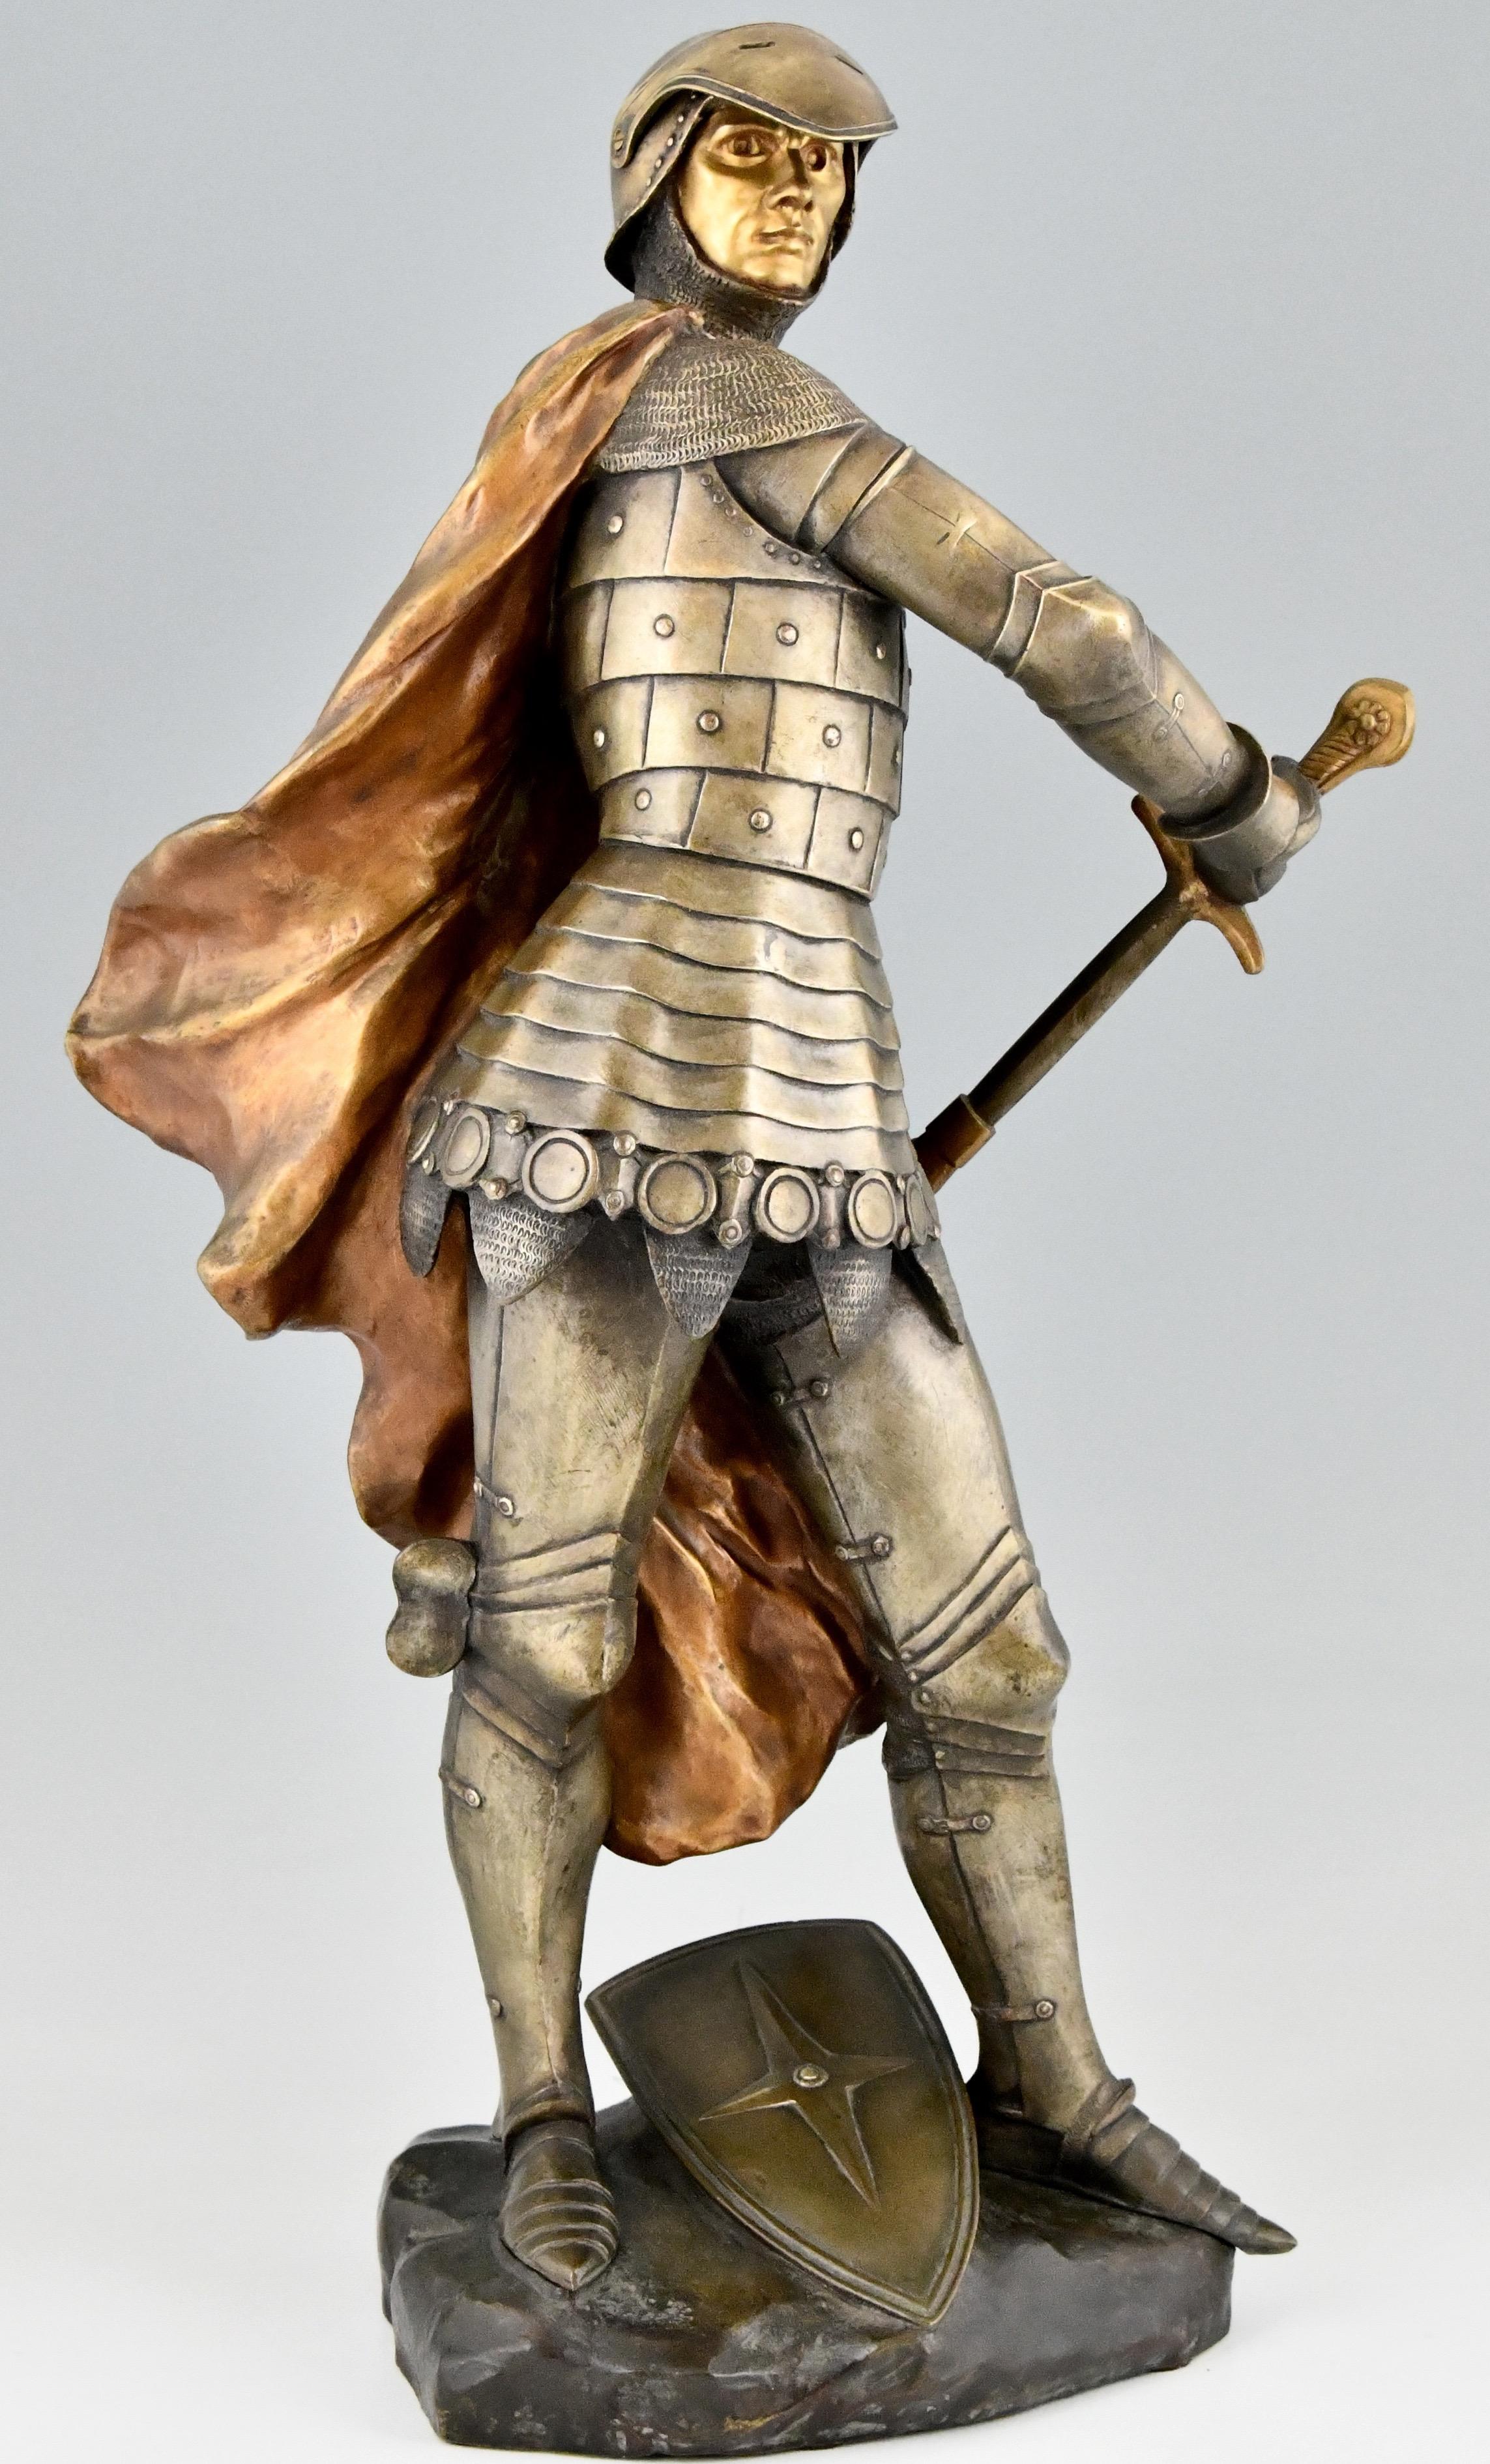 Patinated Art Nouveau Bronze Sculpture of a Knight in Armor, Lucas Madrassi